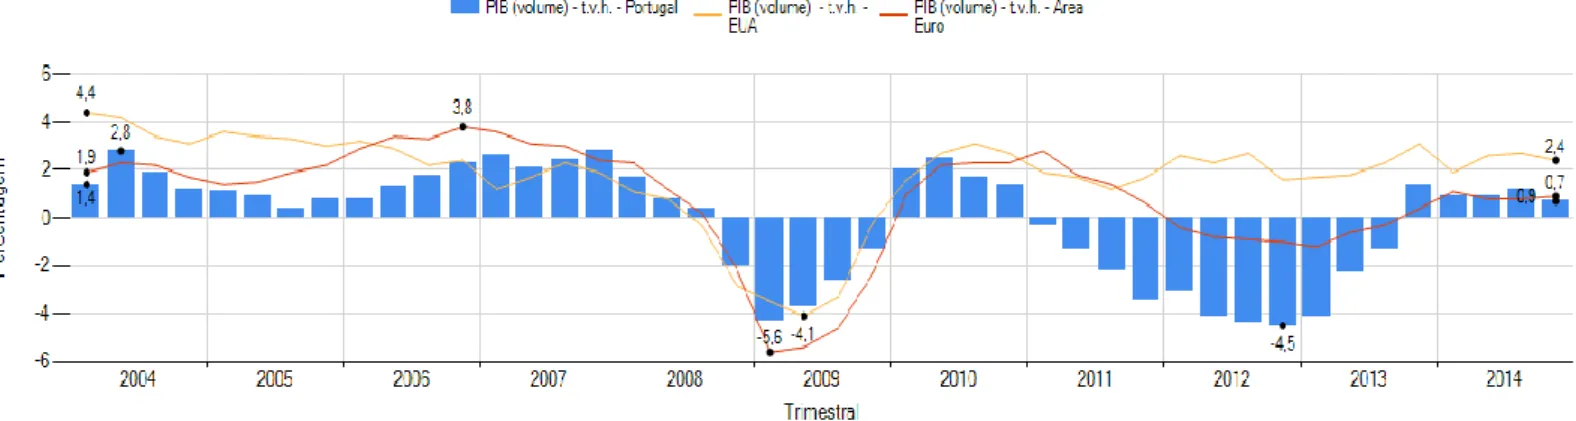 Figura 2: PIB (volume) – t.v.h – Portugal, EUA e Área Euro  Fonte: Banco de Portugal 